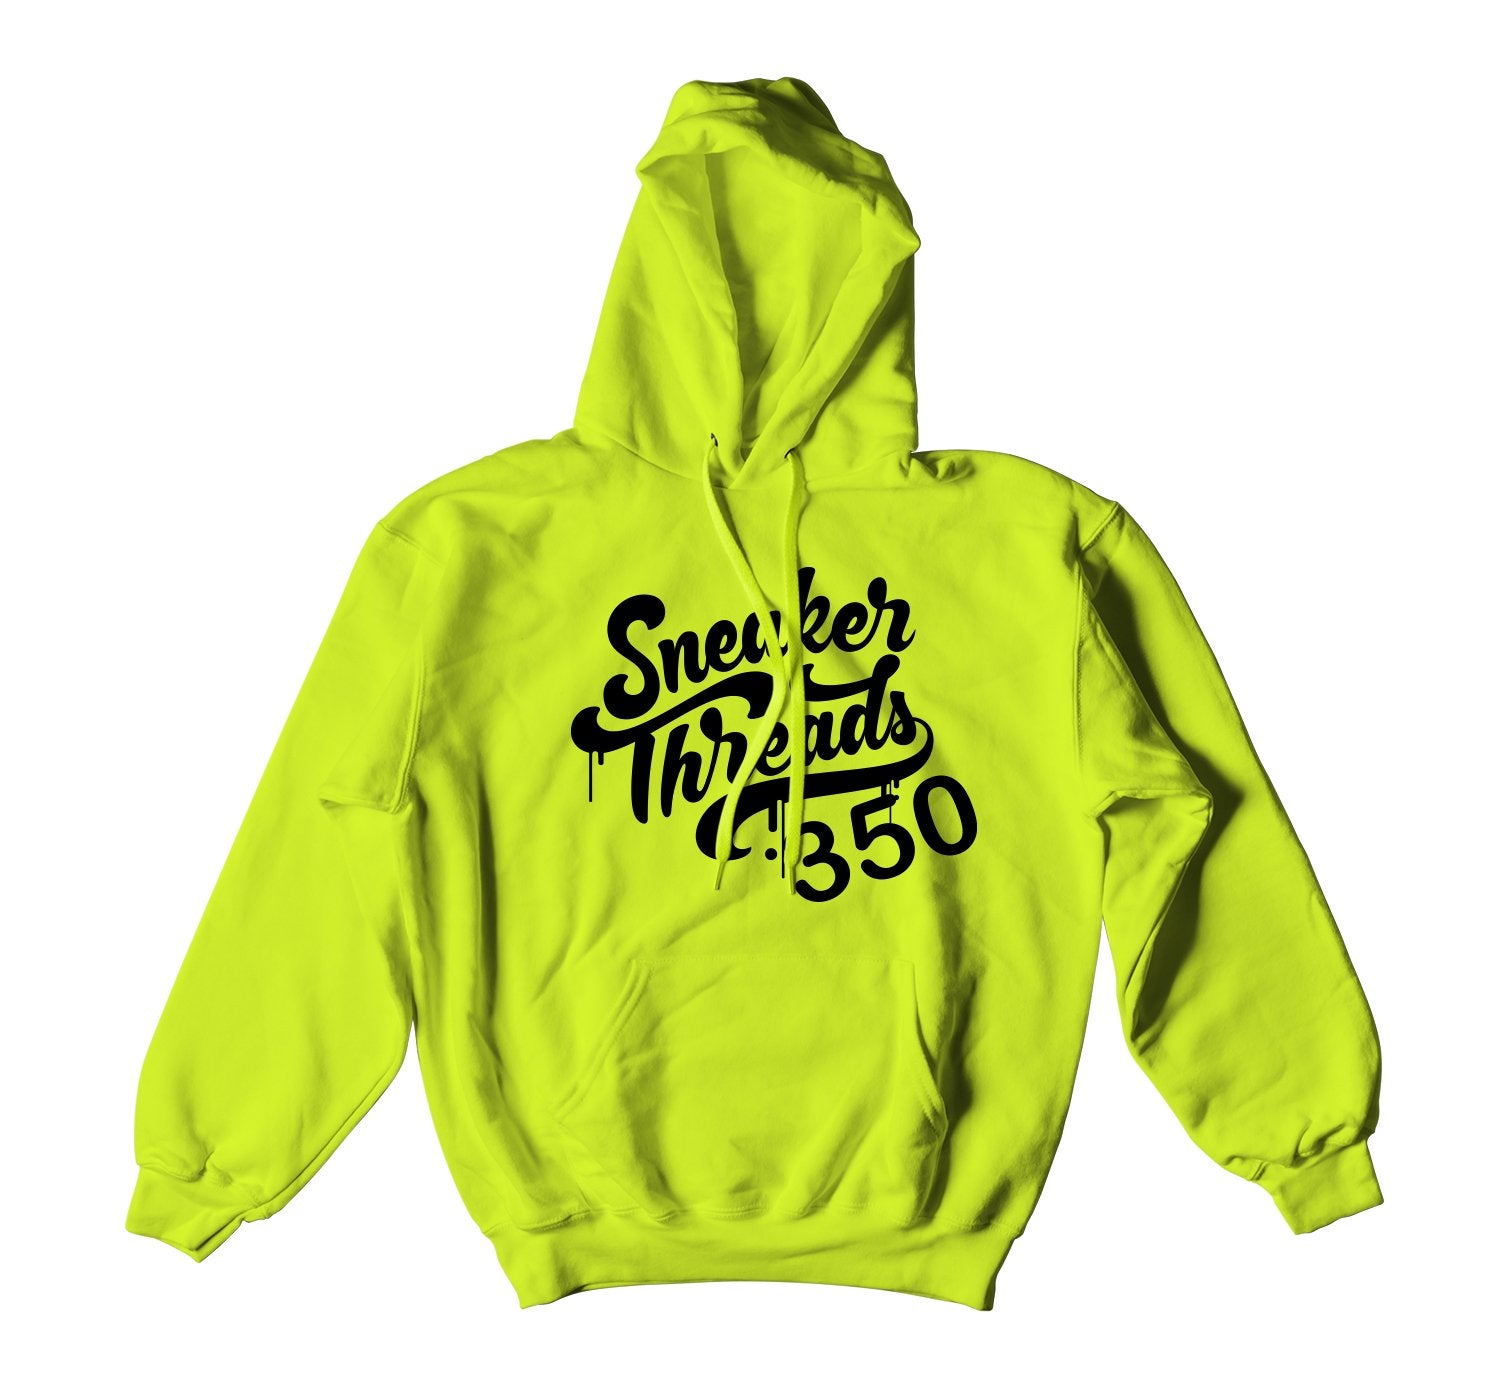 Win The Adidas Yeezy Boost 350 V2 Yeezreel Or Supreme Hoodie For $1